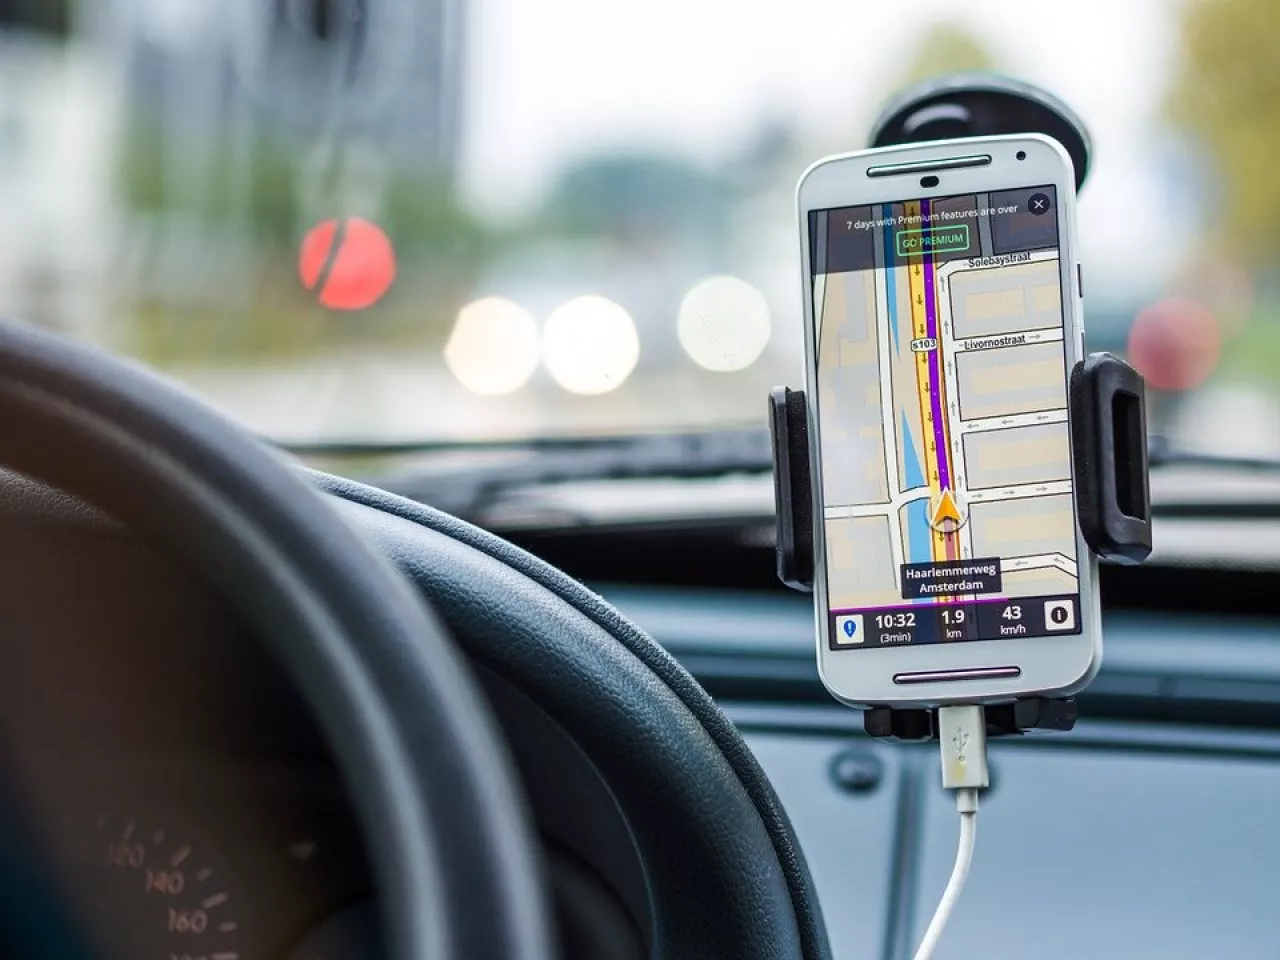 GPS v mobile